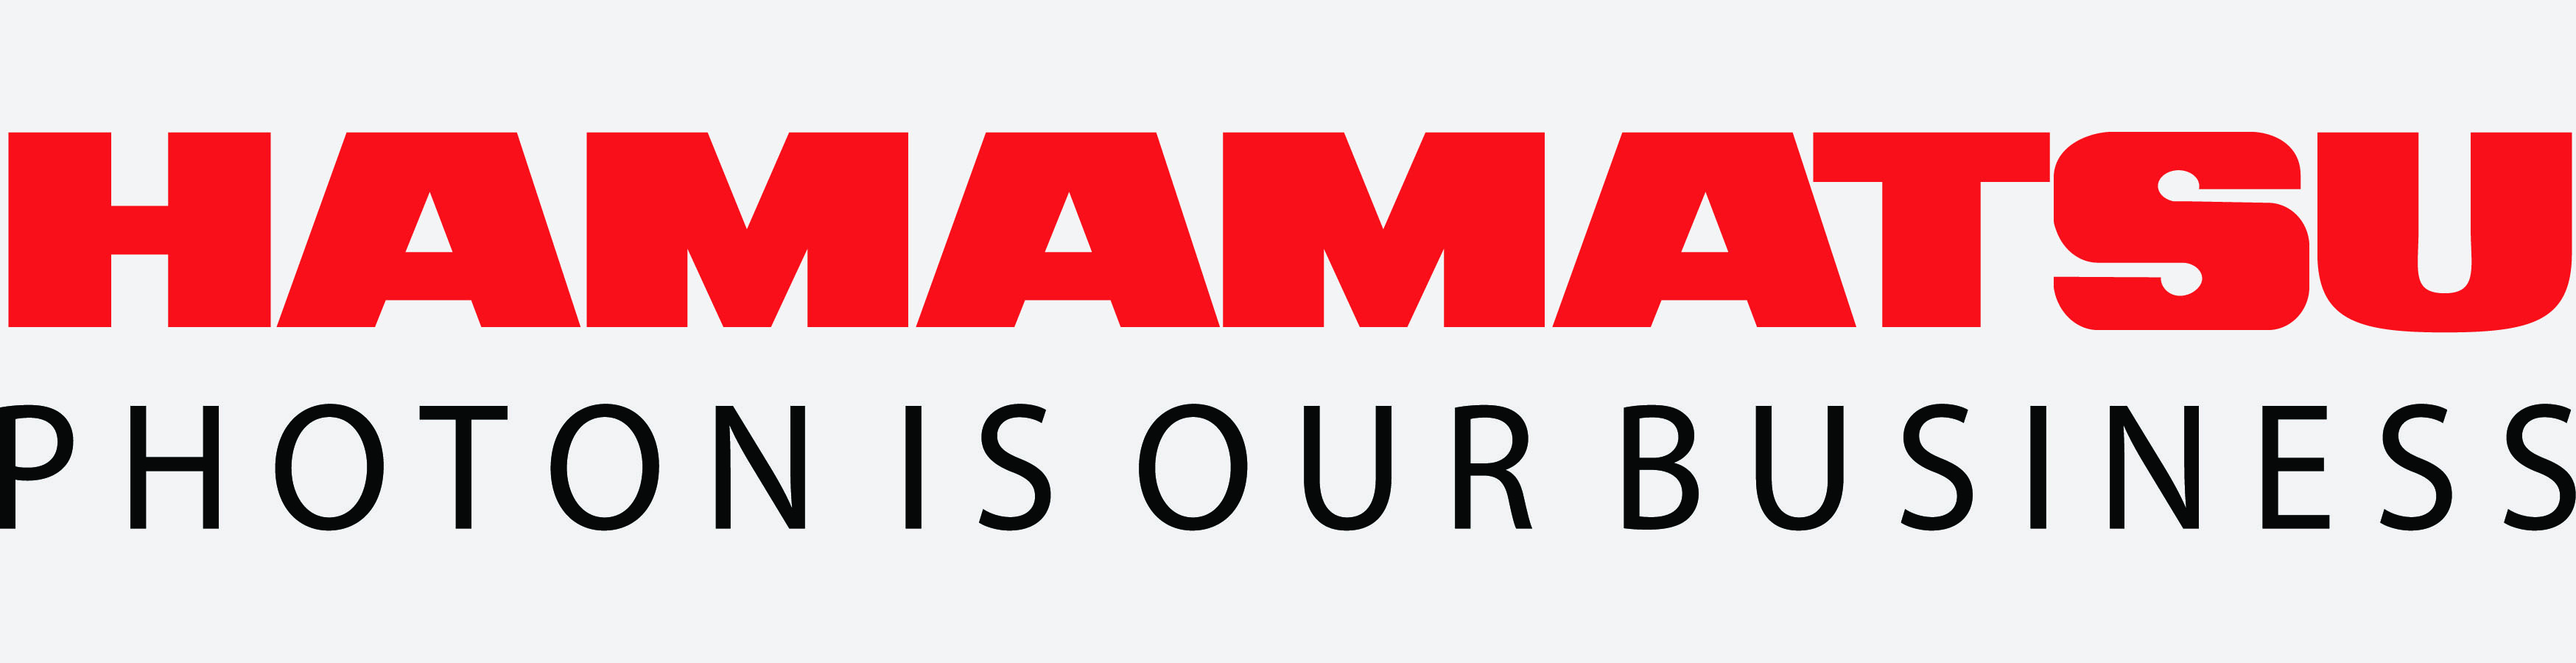 2017-09/hamamatsu-logo-3-copy-(large).jpg